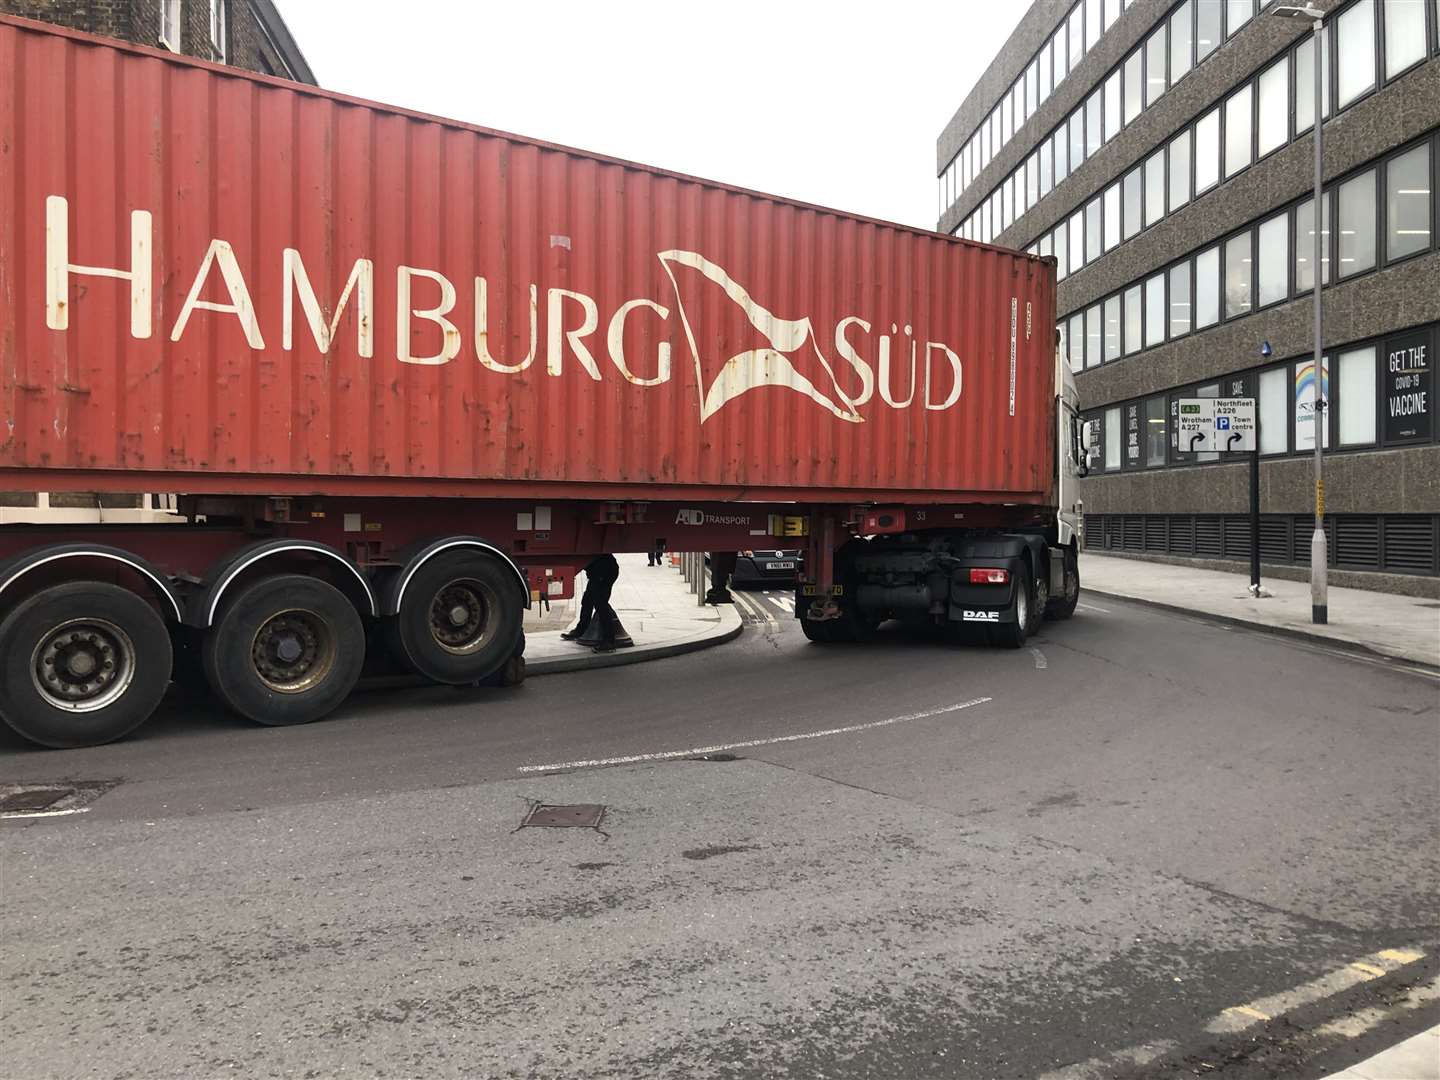 The lorry was stuck on a bollard